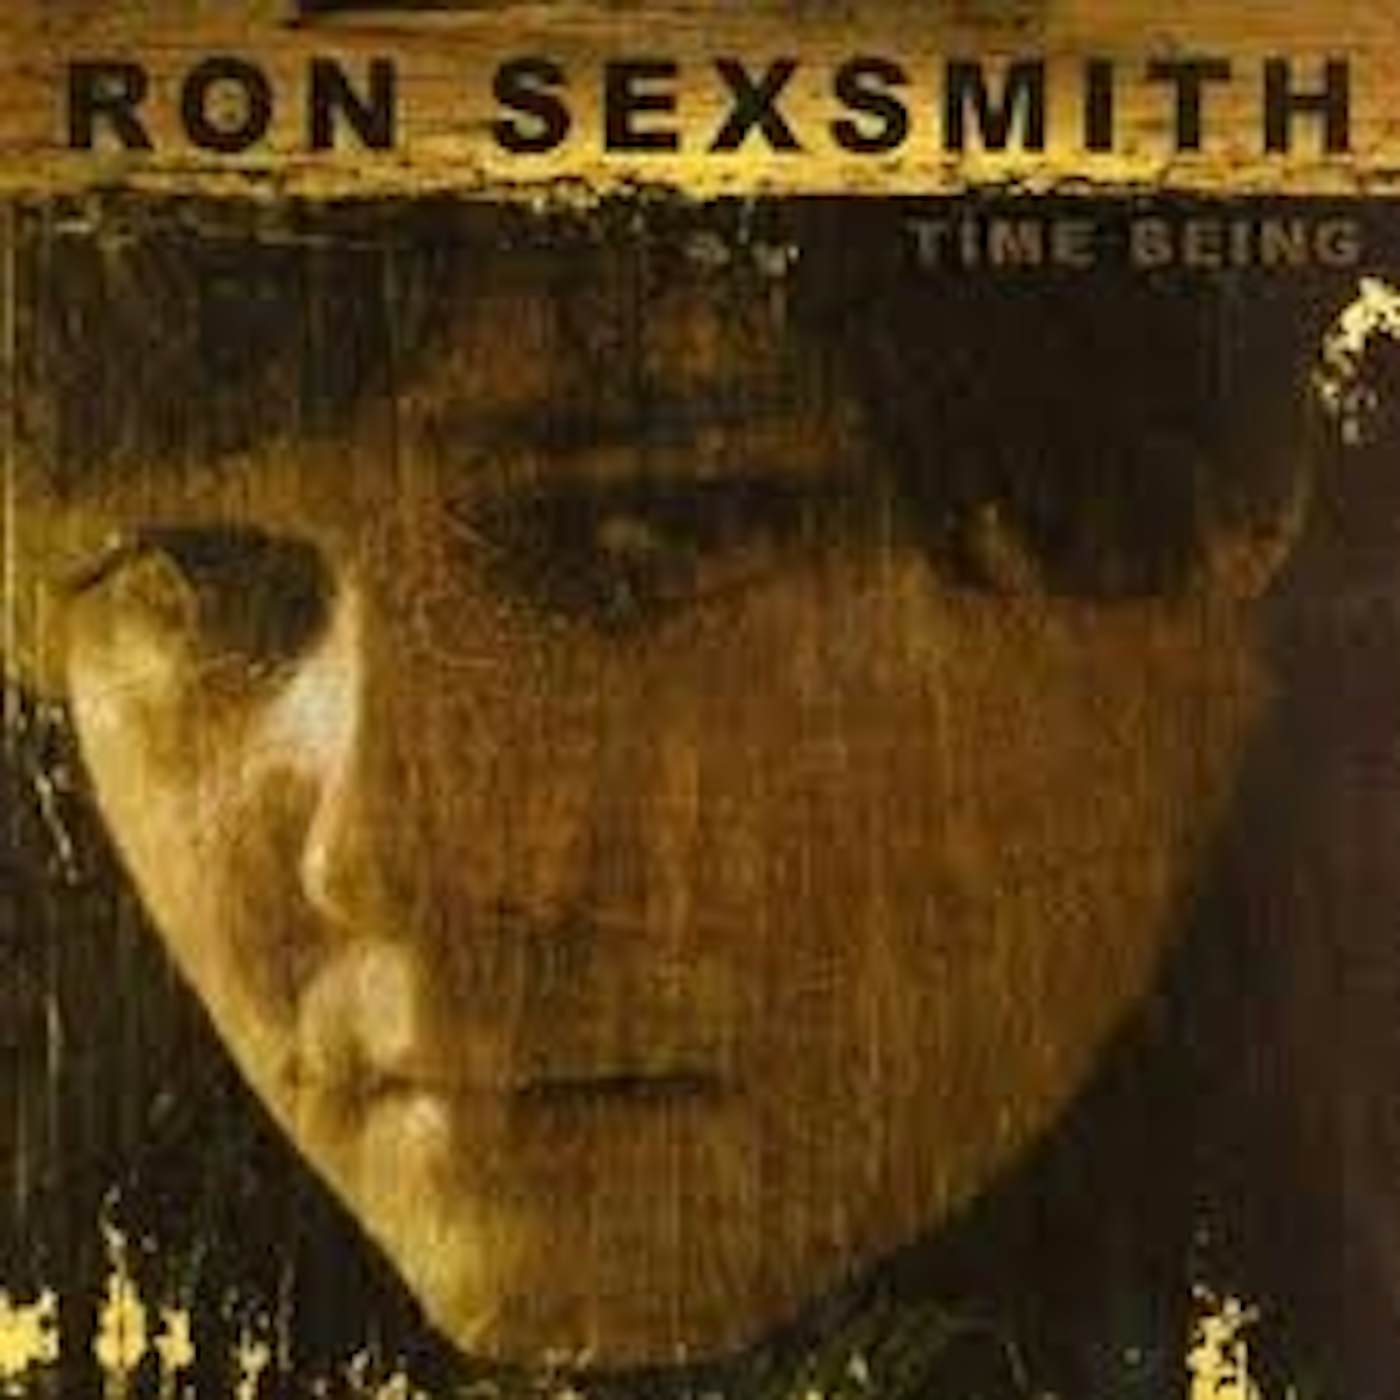 Ron Sexsmith Time Being Vinyl Record